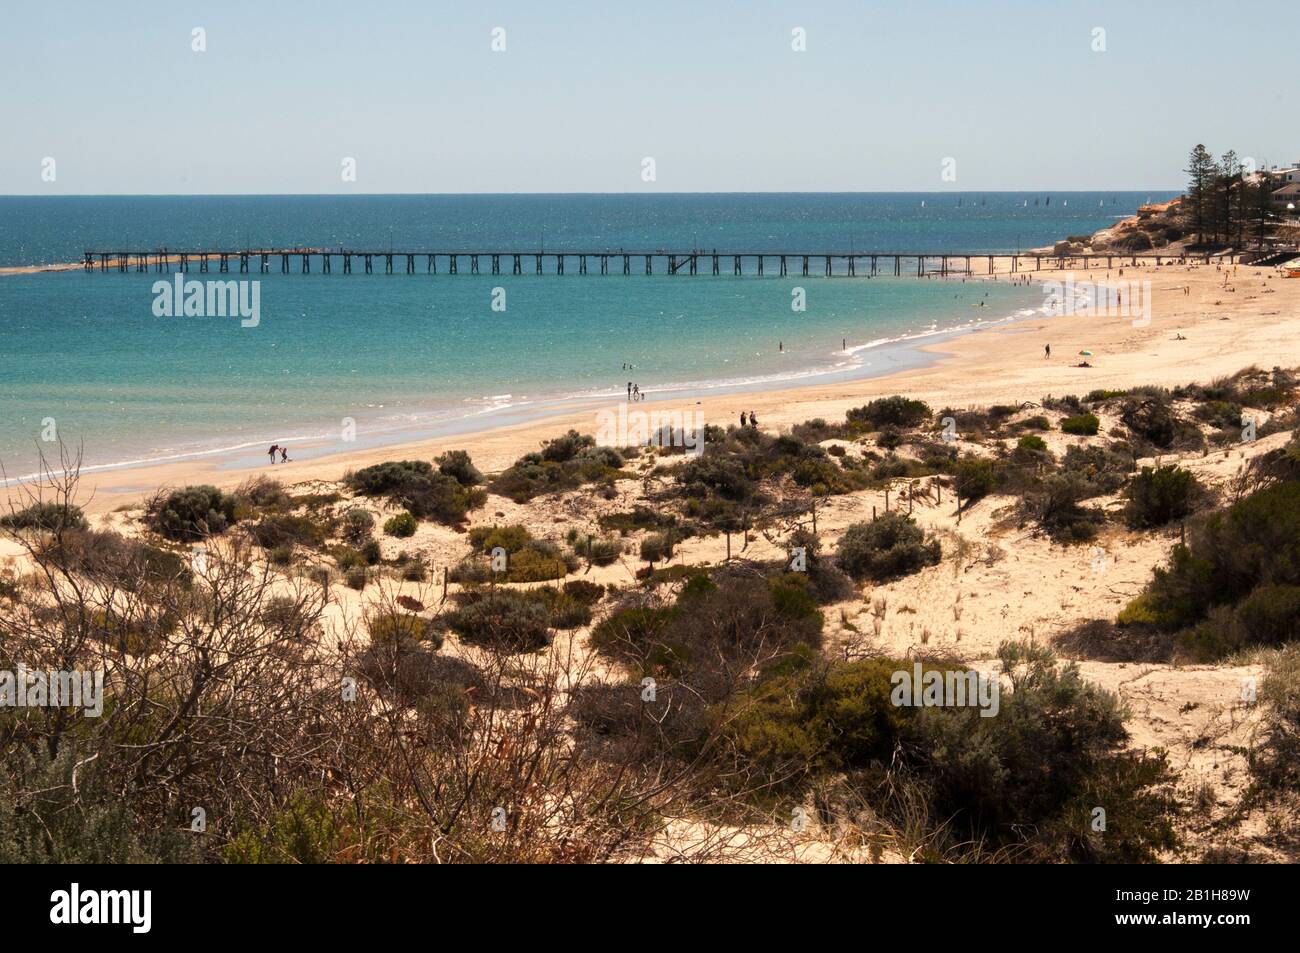 Beach and jetty at Port Noarlunga, South Australia Stock Photo